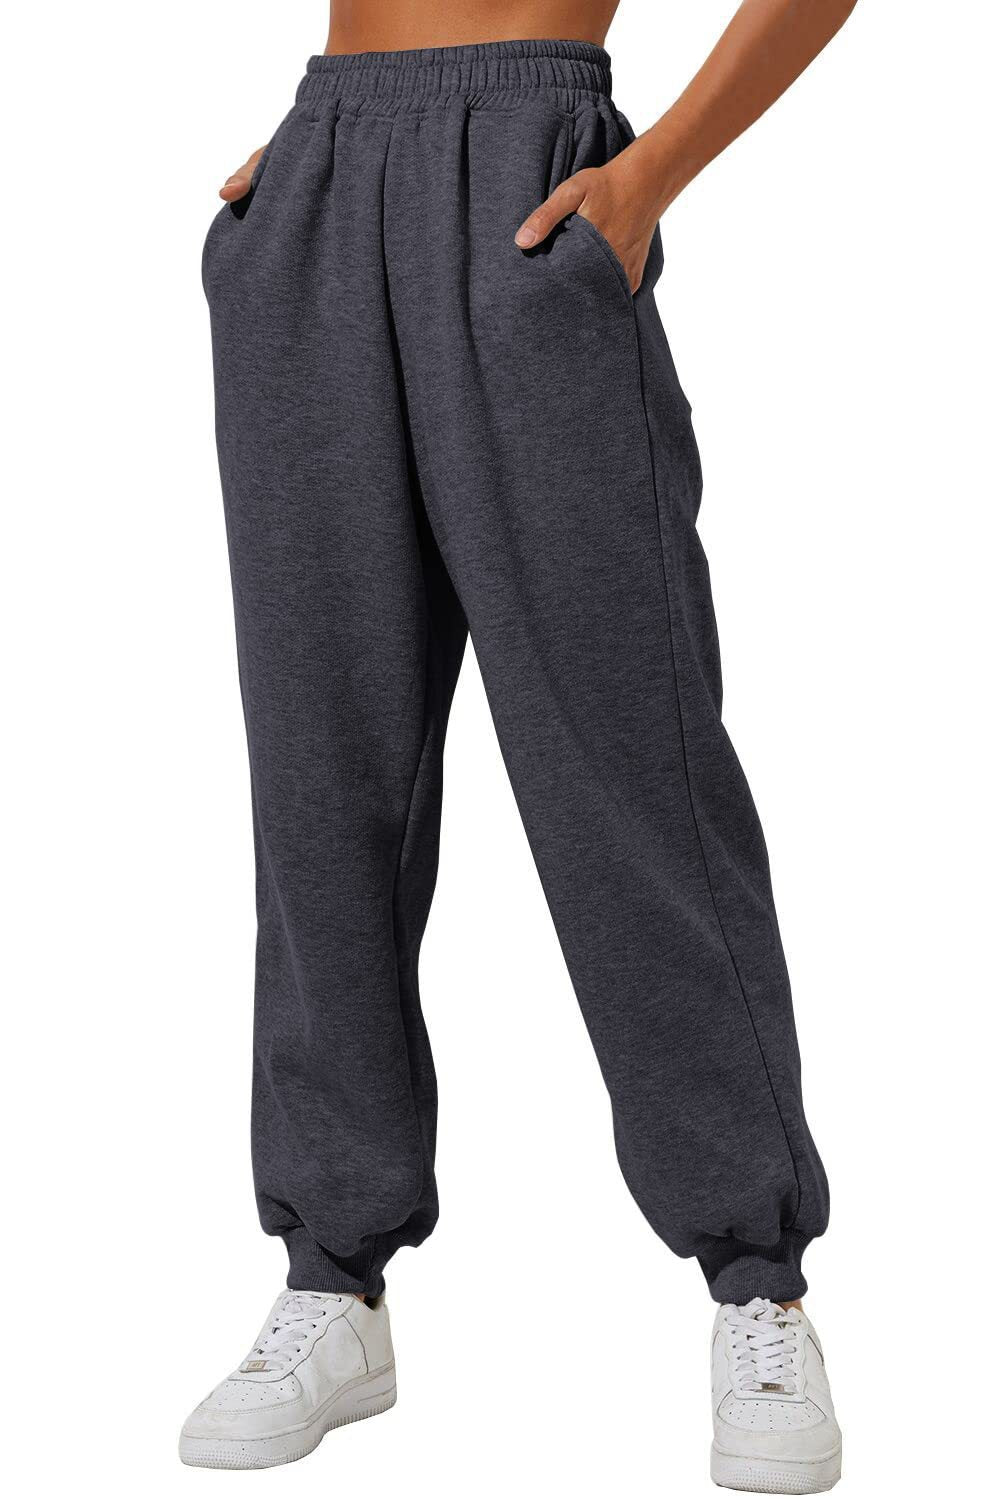 Women's Jogger Sweatpants - High-Waisted Drawstring Lounge Pants with Pockets - Dark Grey - Pants & Capris - Carvan Mart